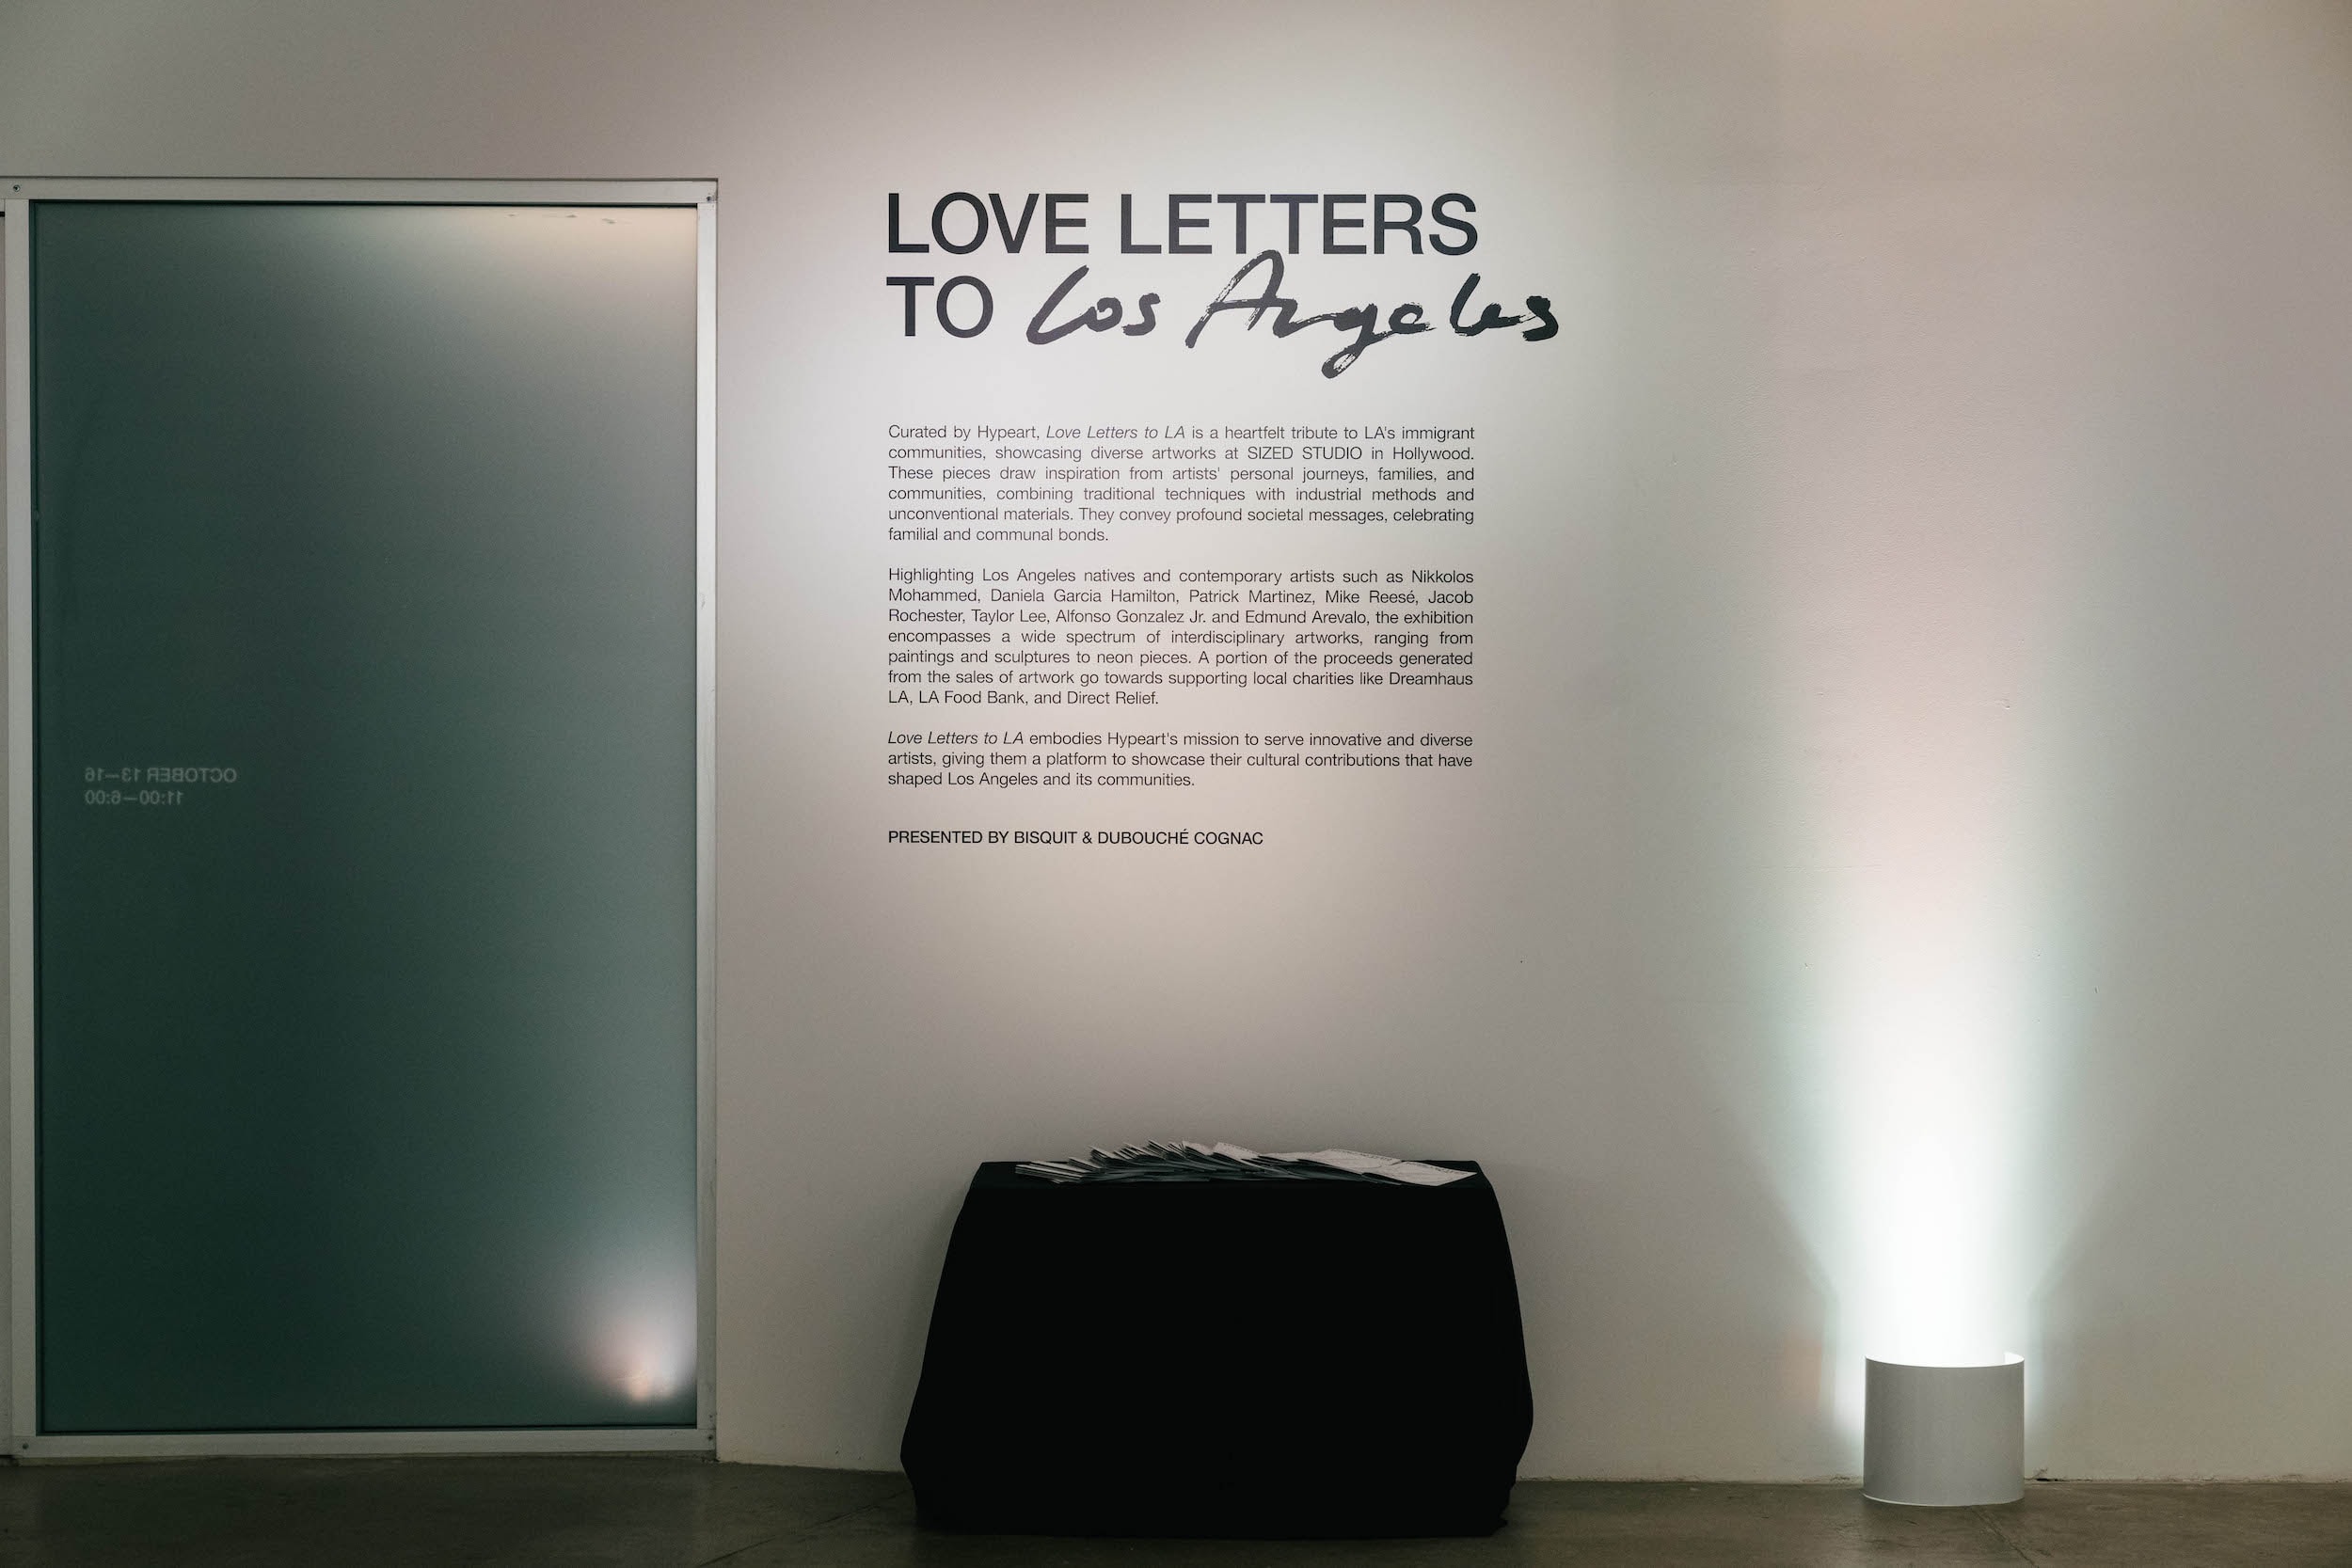 hypeart love letters to la exhibition announcement bisquit and dubouche sized studio exhibition artworks